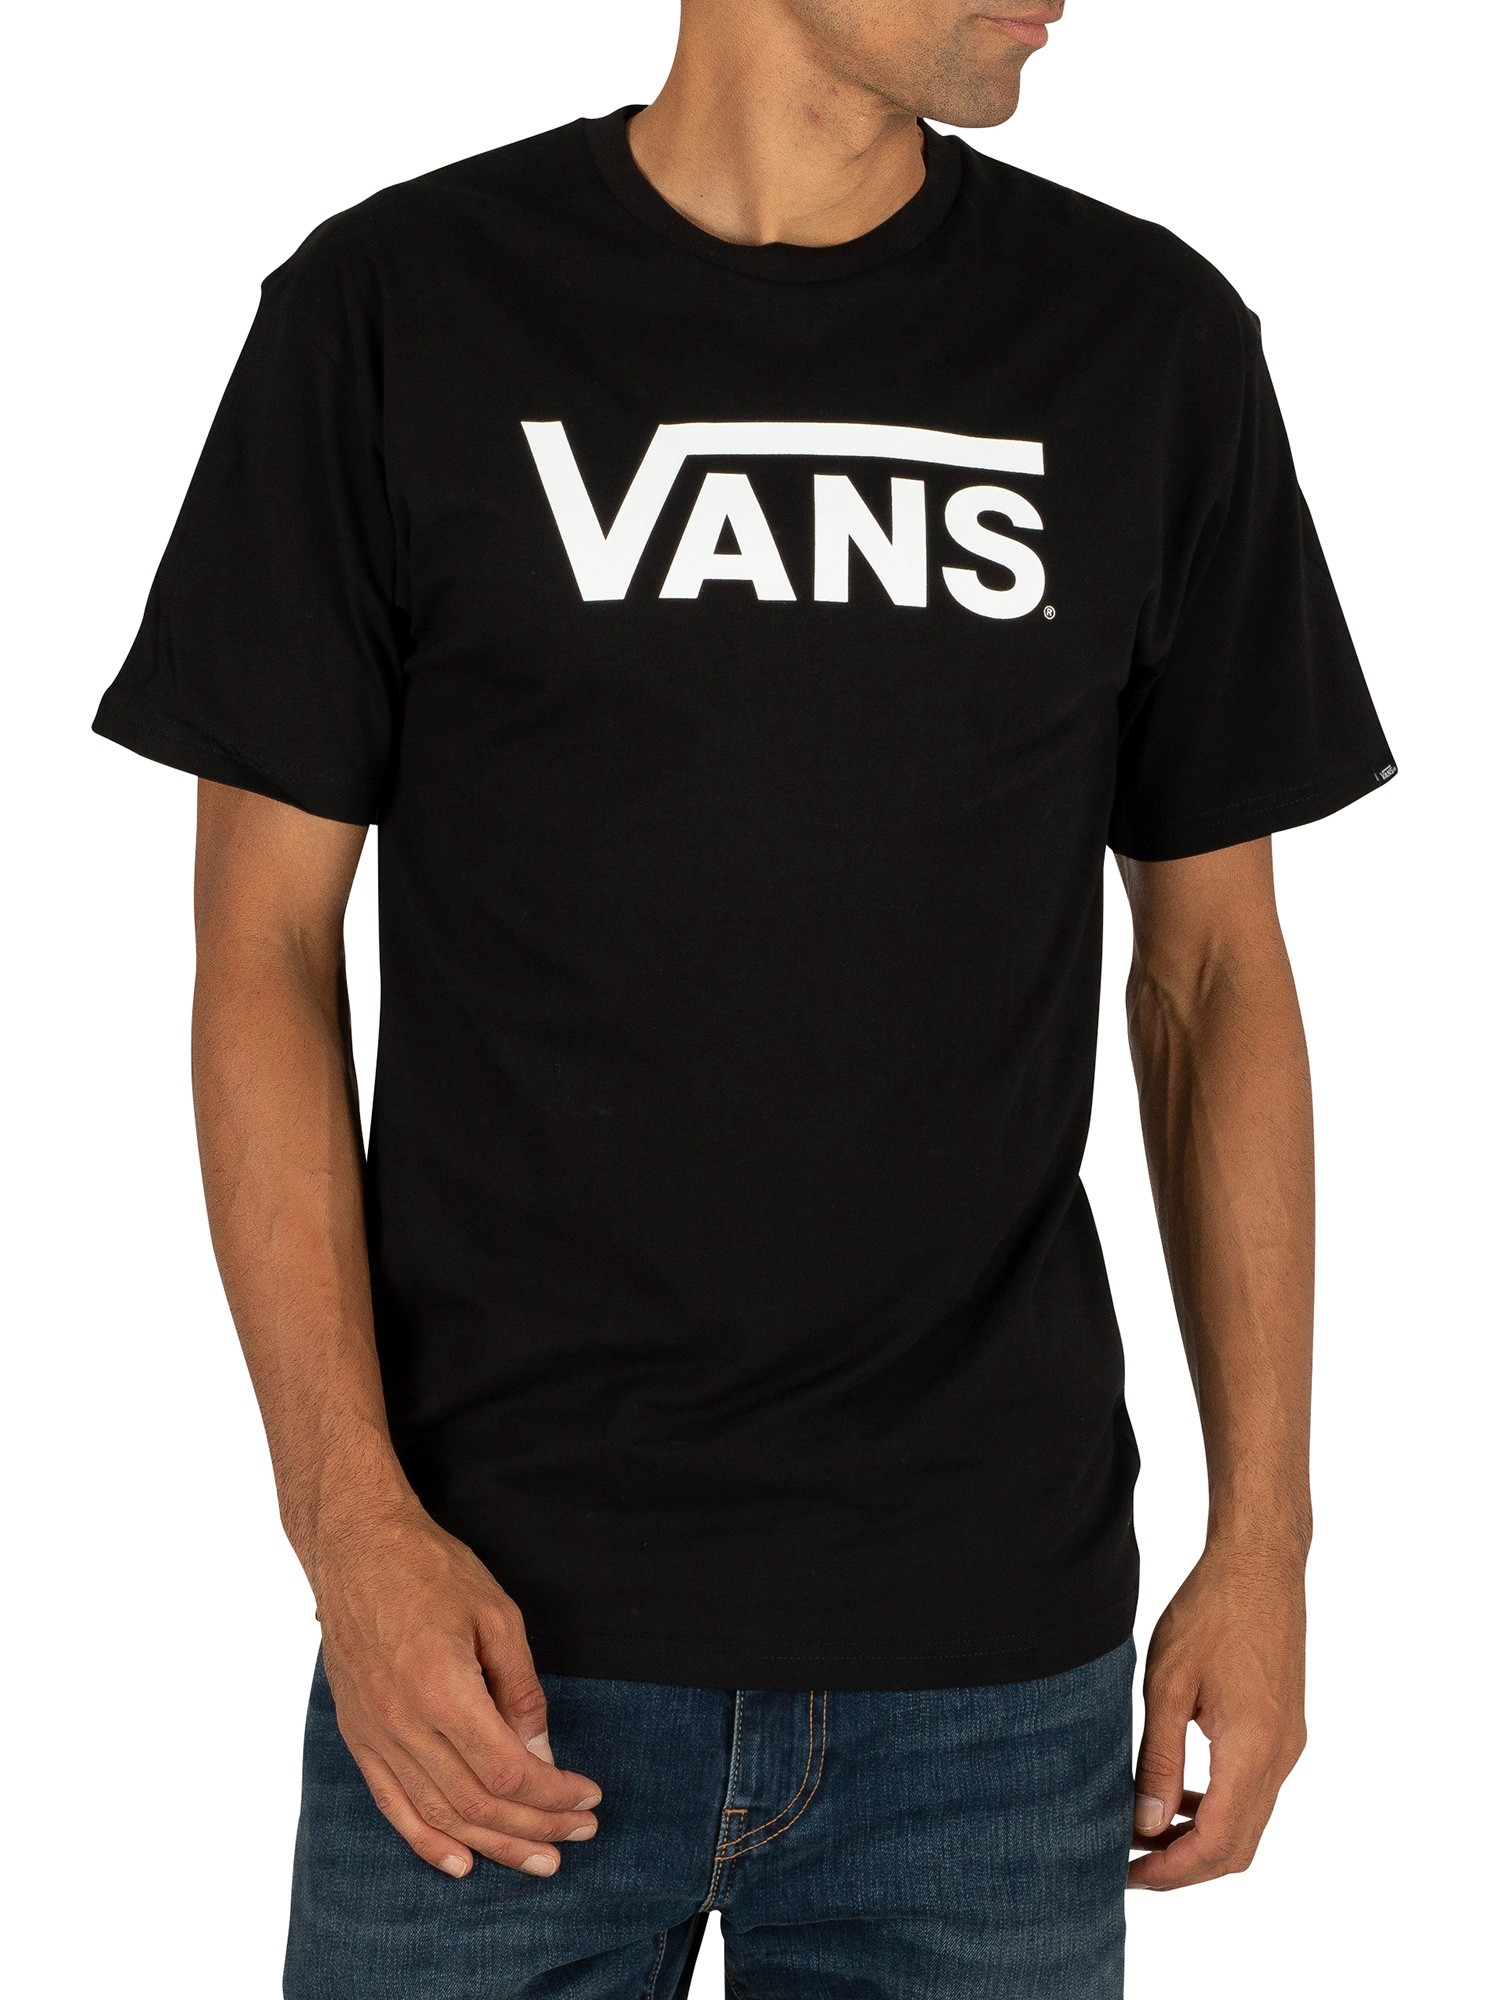 Vans Classic Logo T-Shirt - Black/White 